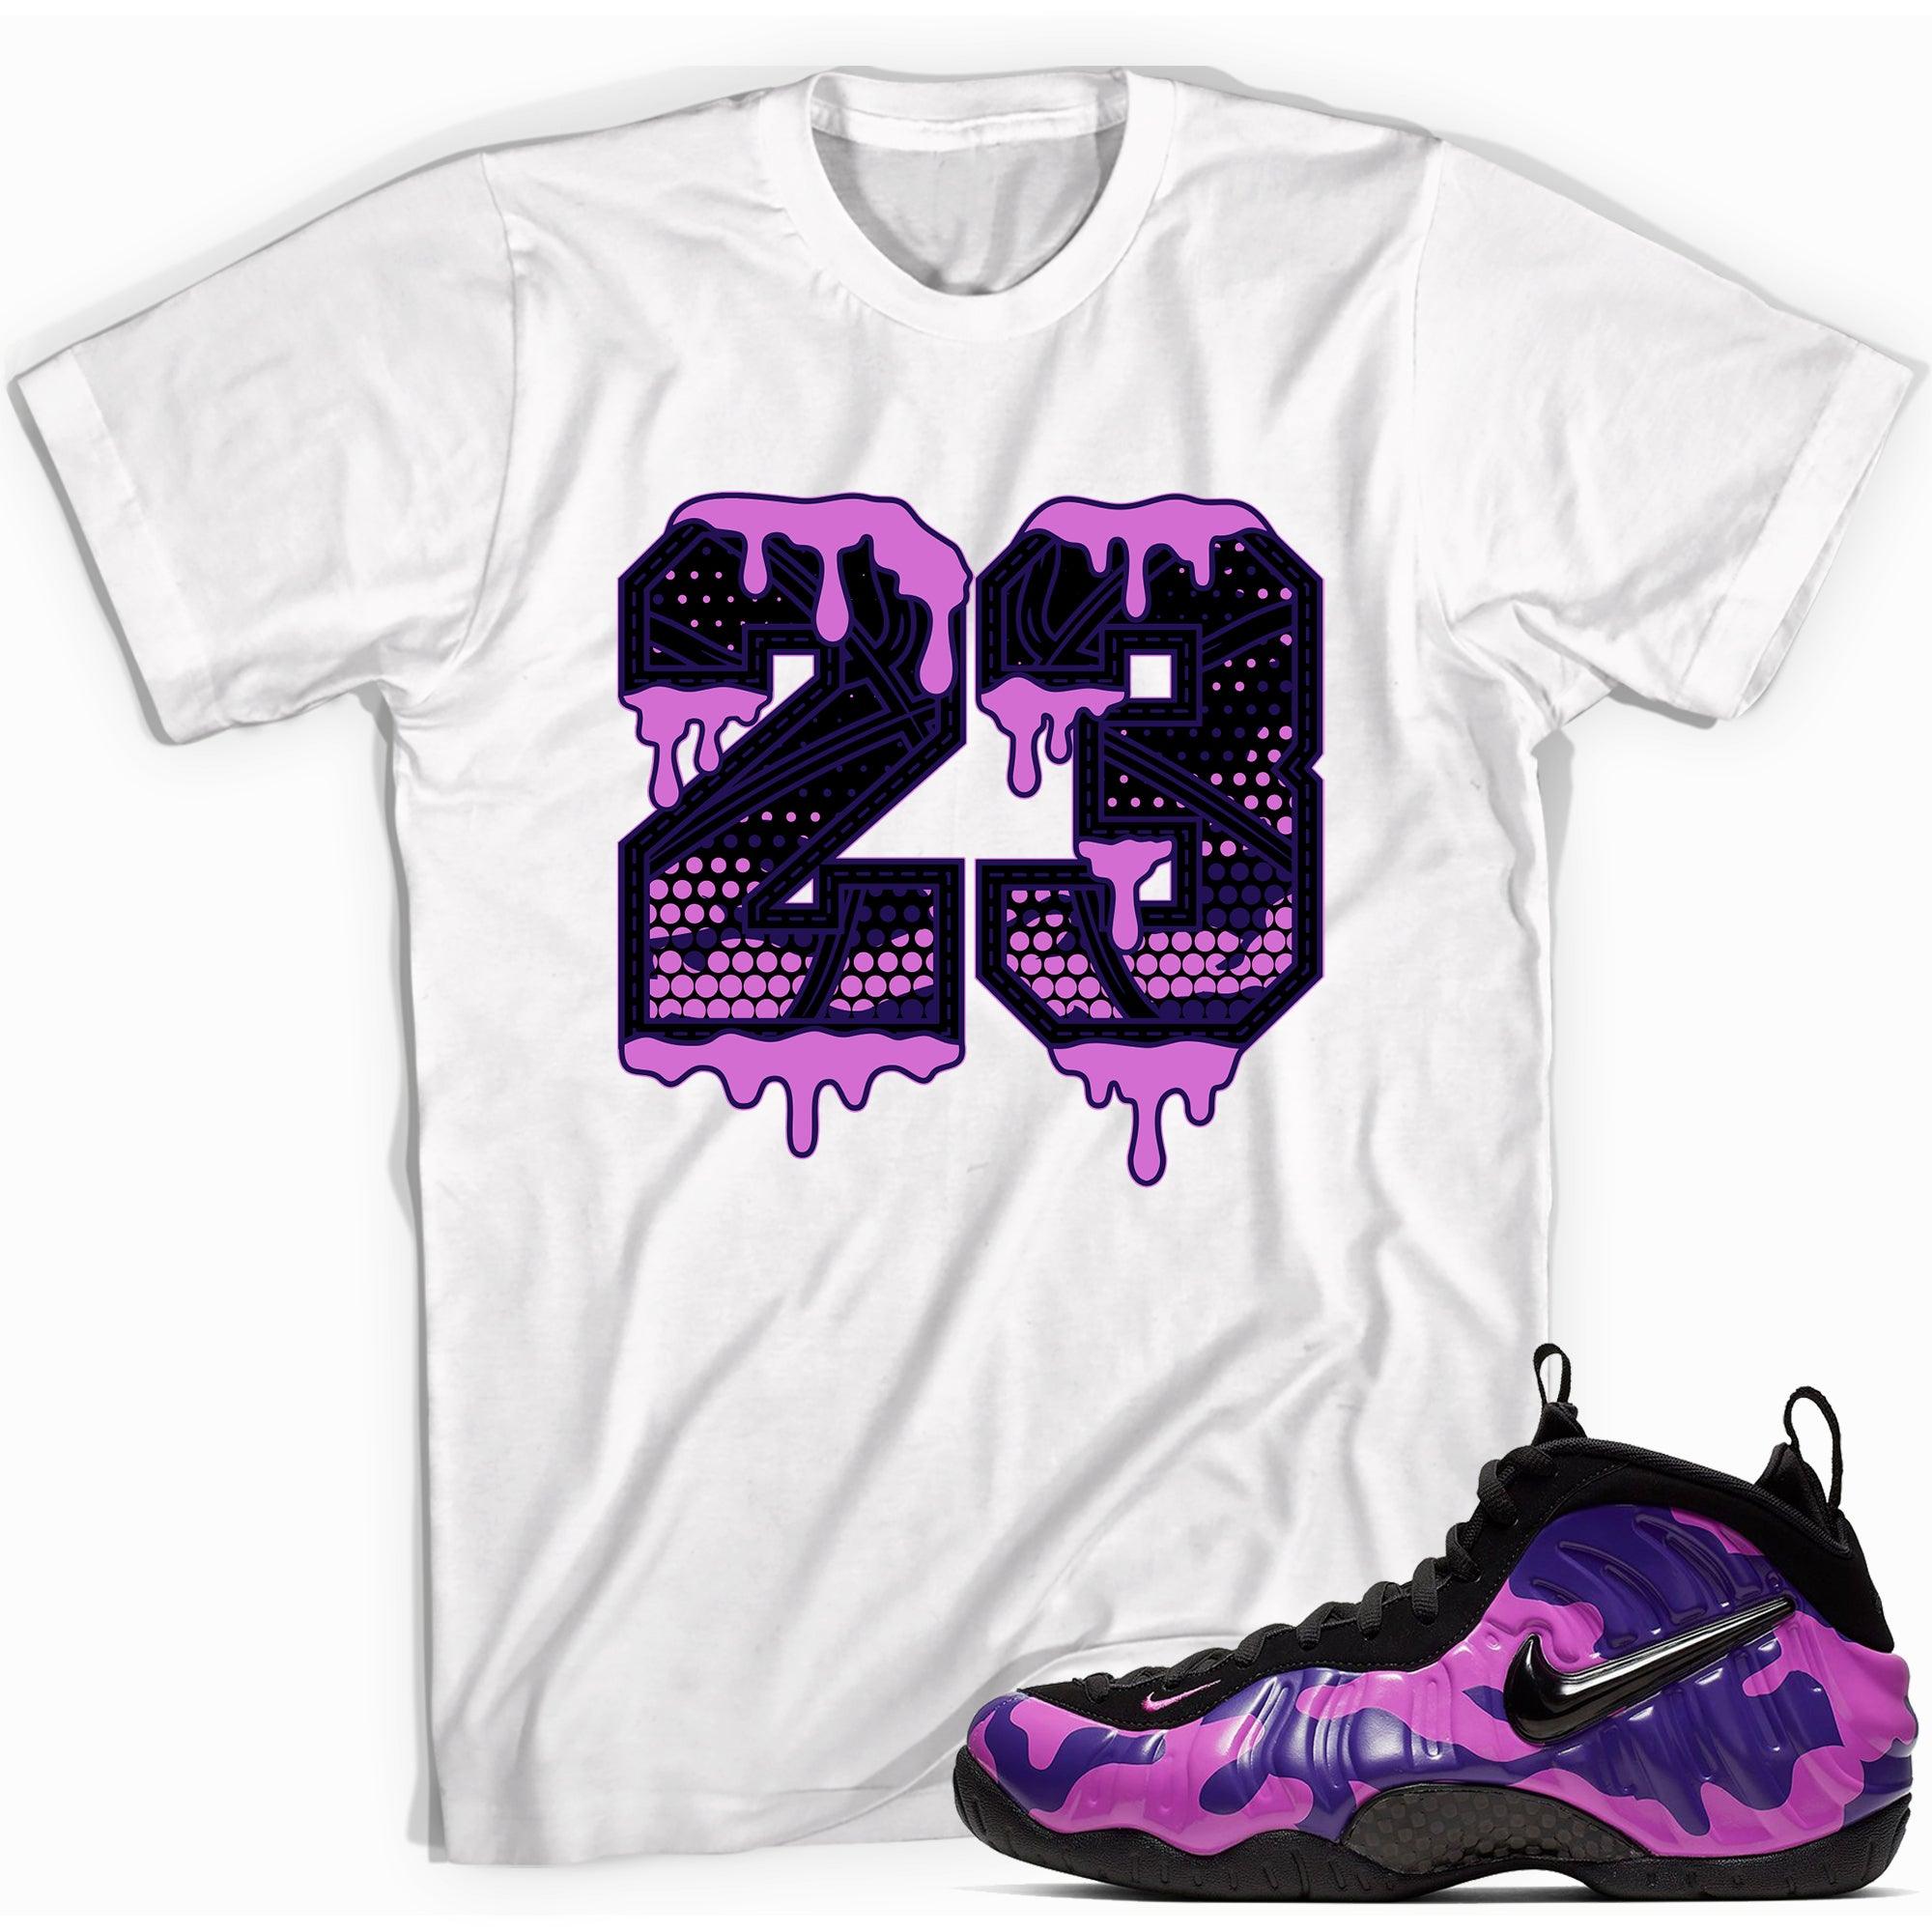 Number 23 Ball Shirt Air Foamposite One Purple Camo photo